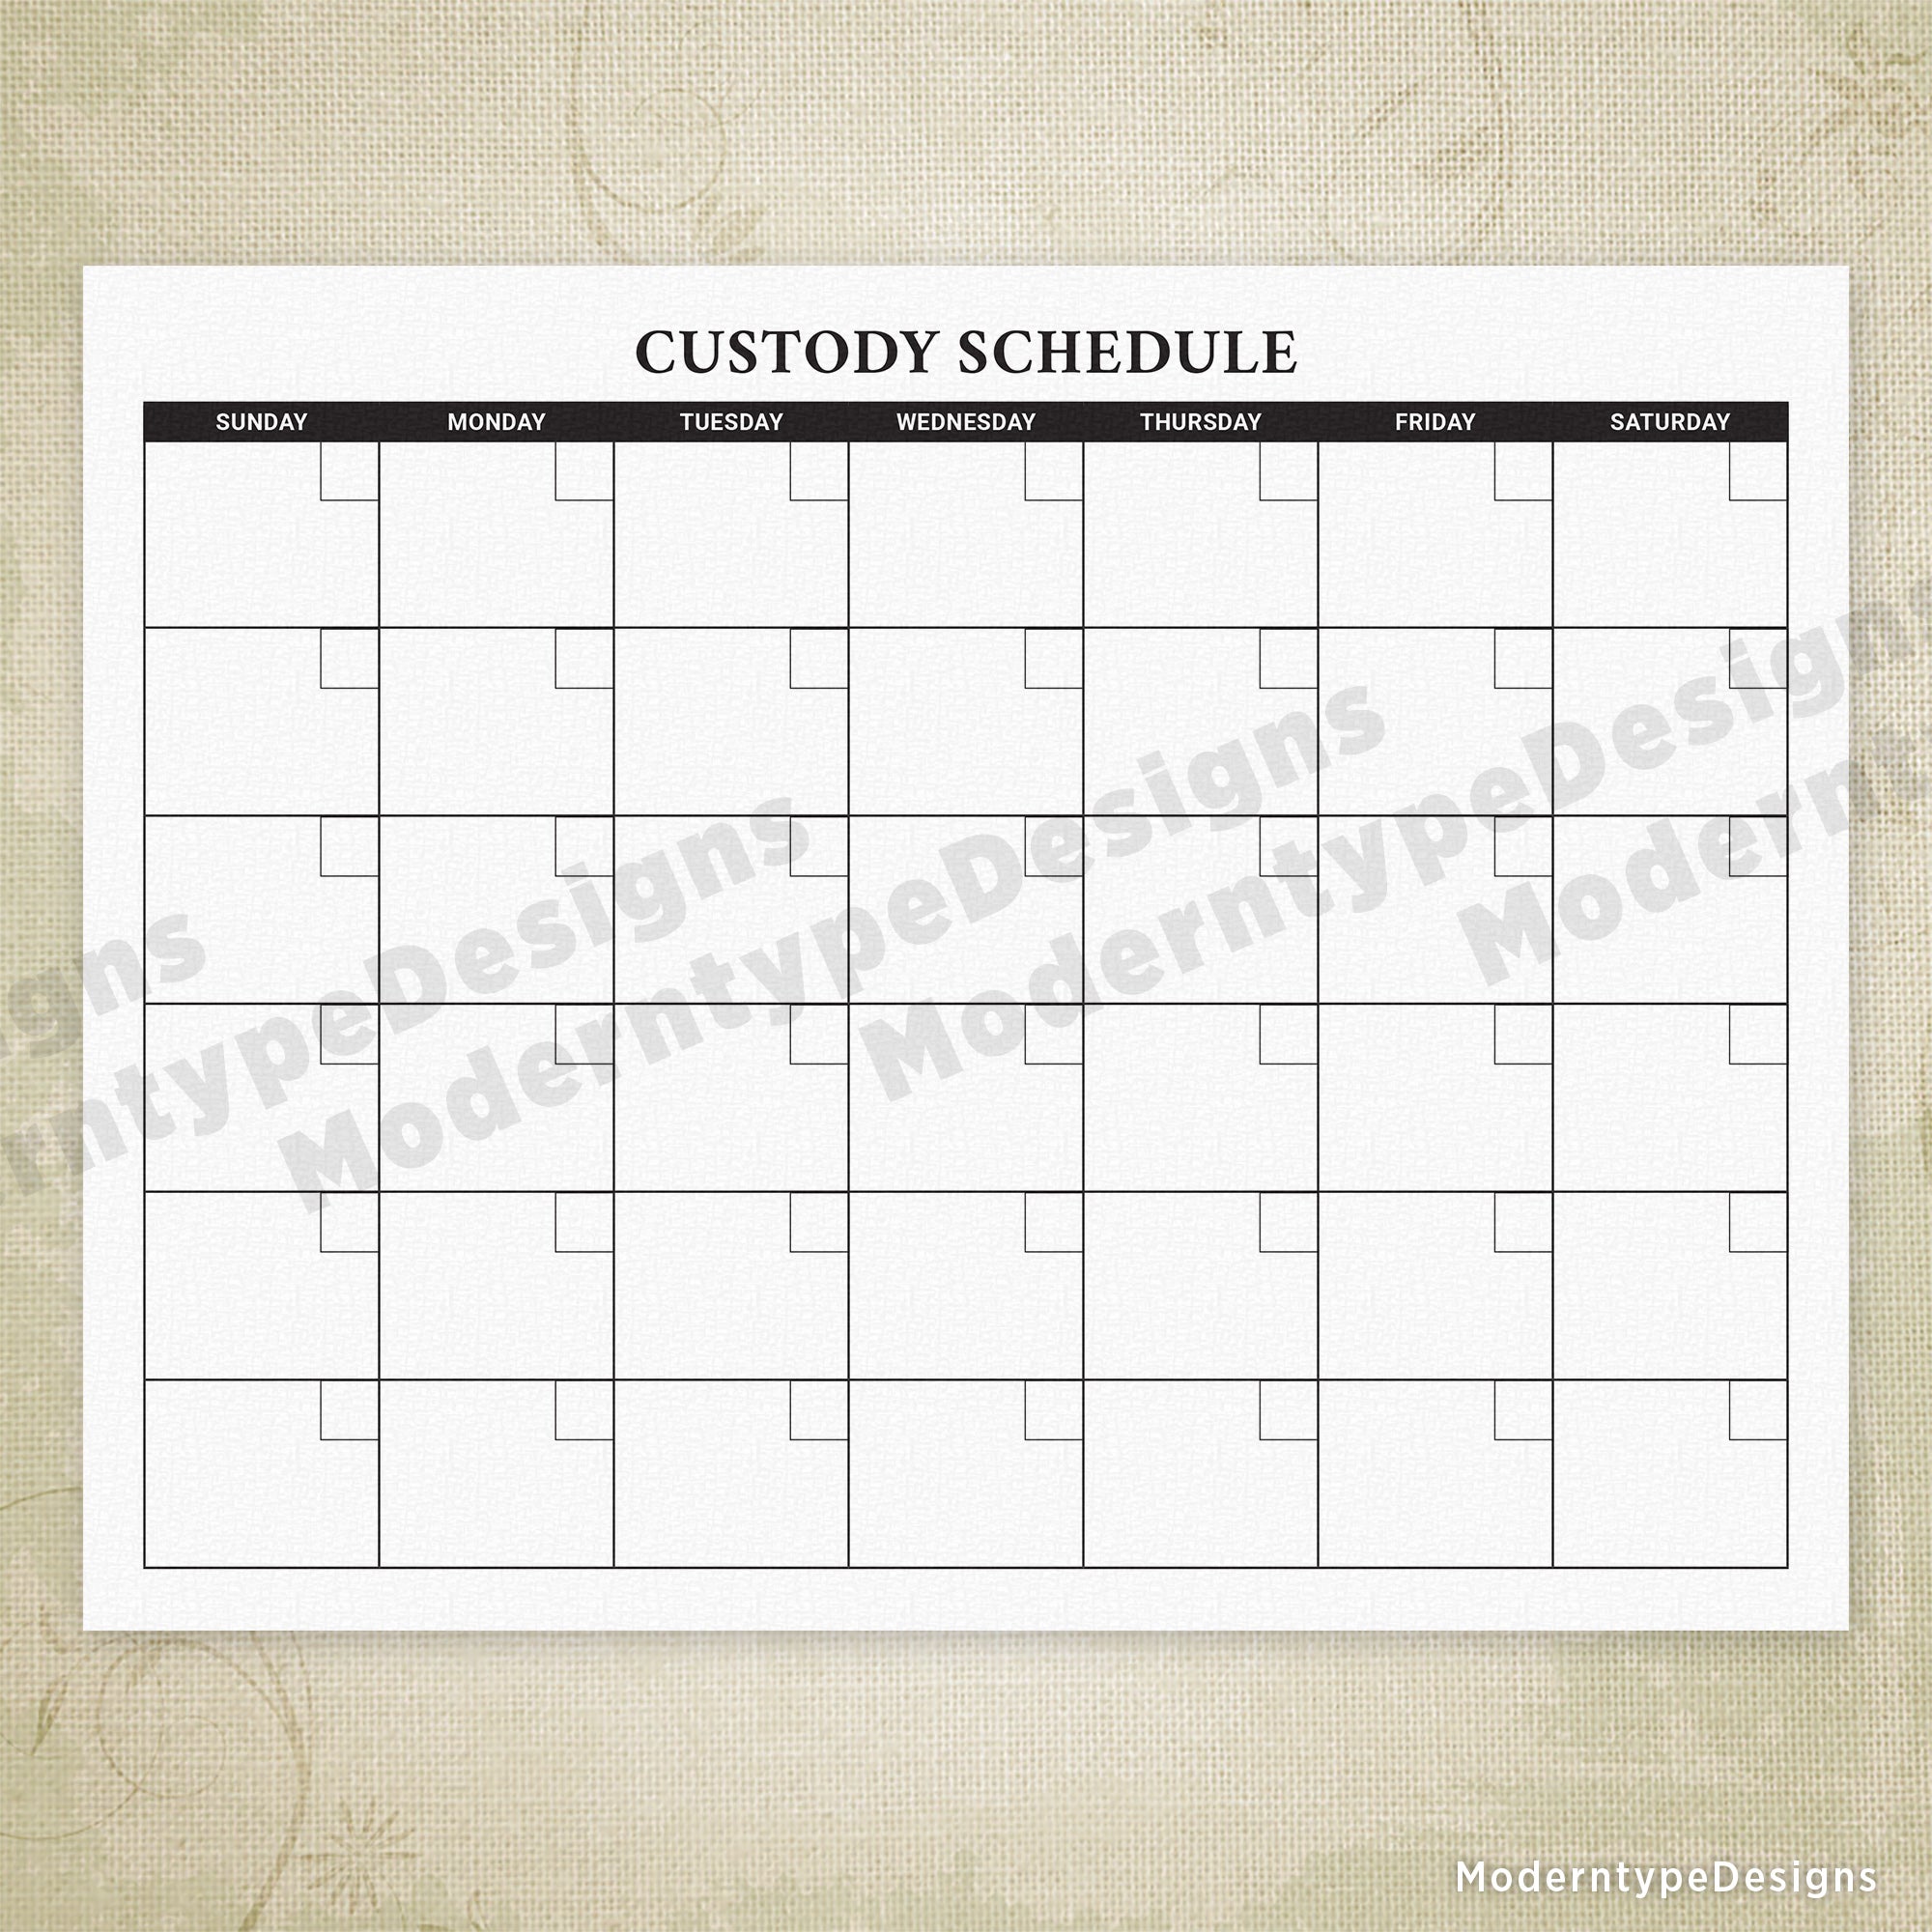 Custody Schedule Calendar Printable for Parents